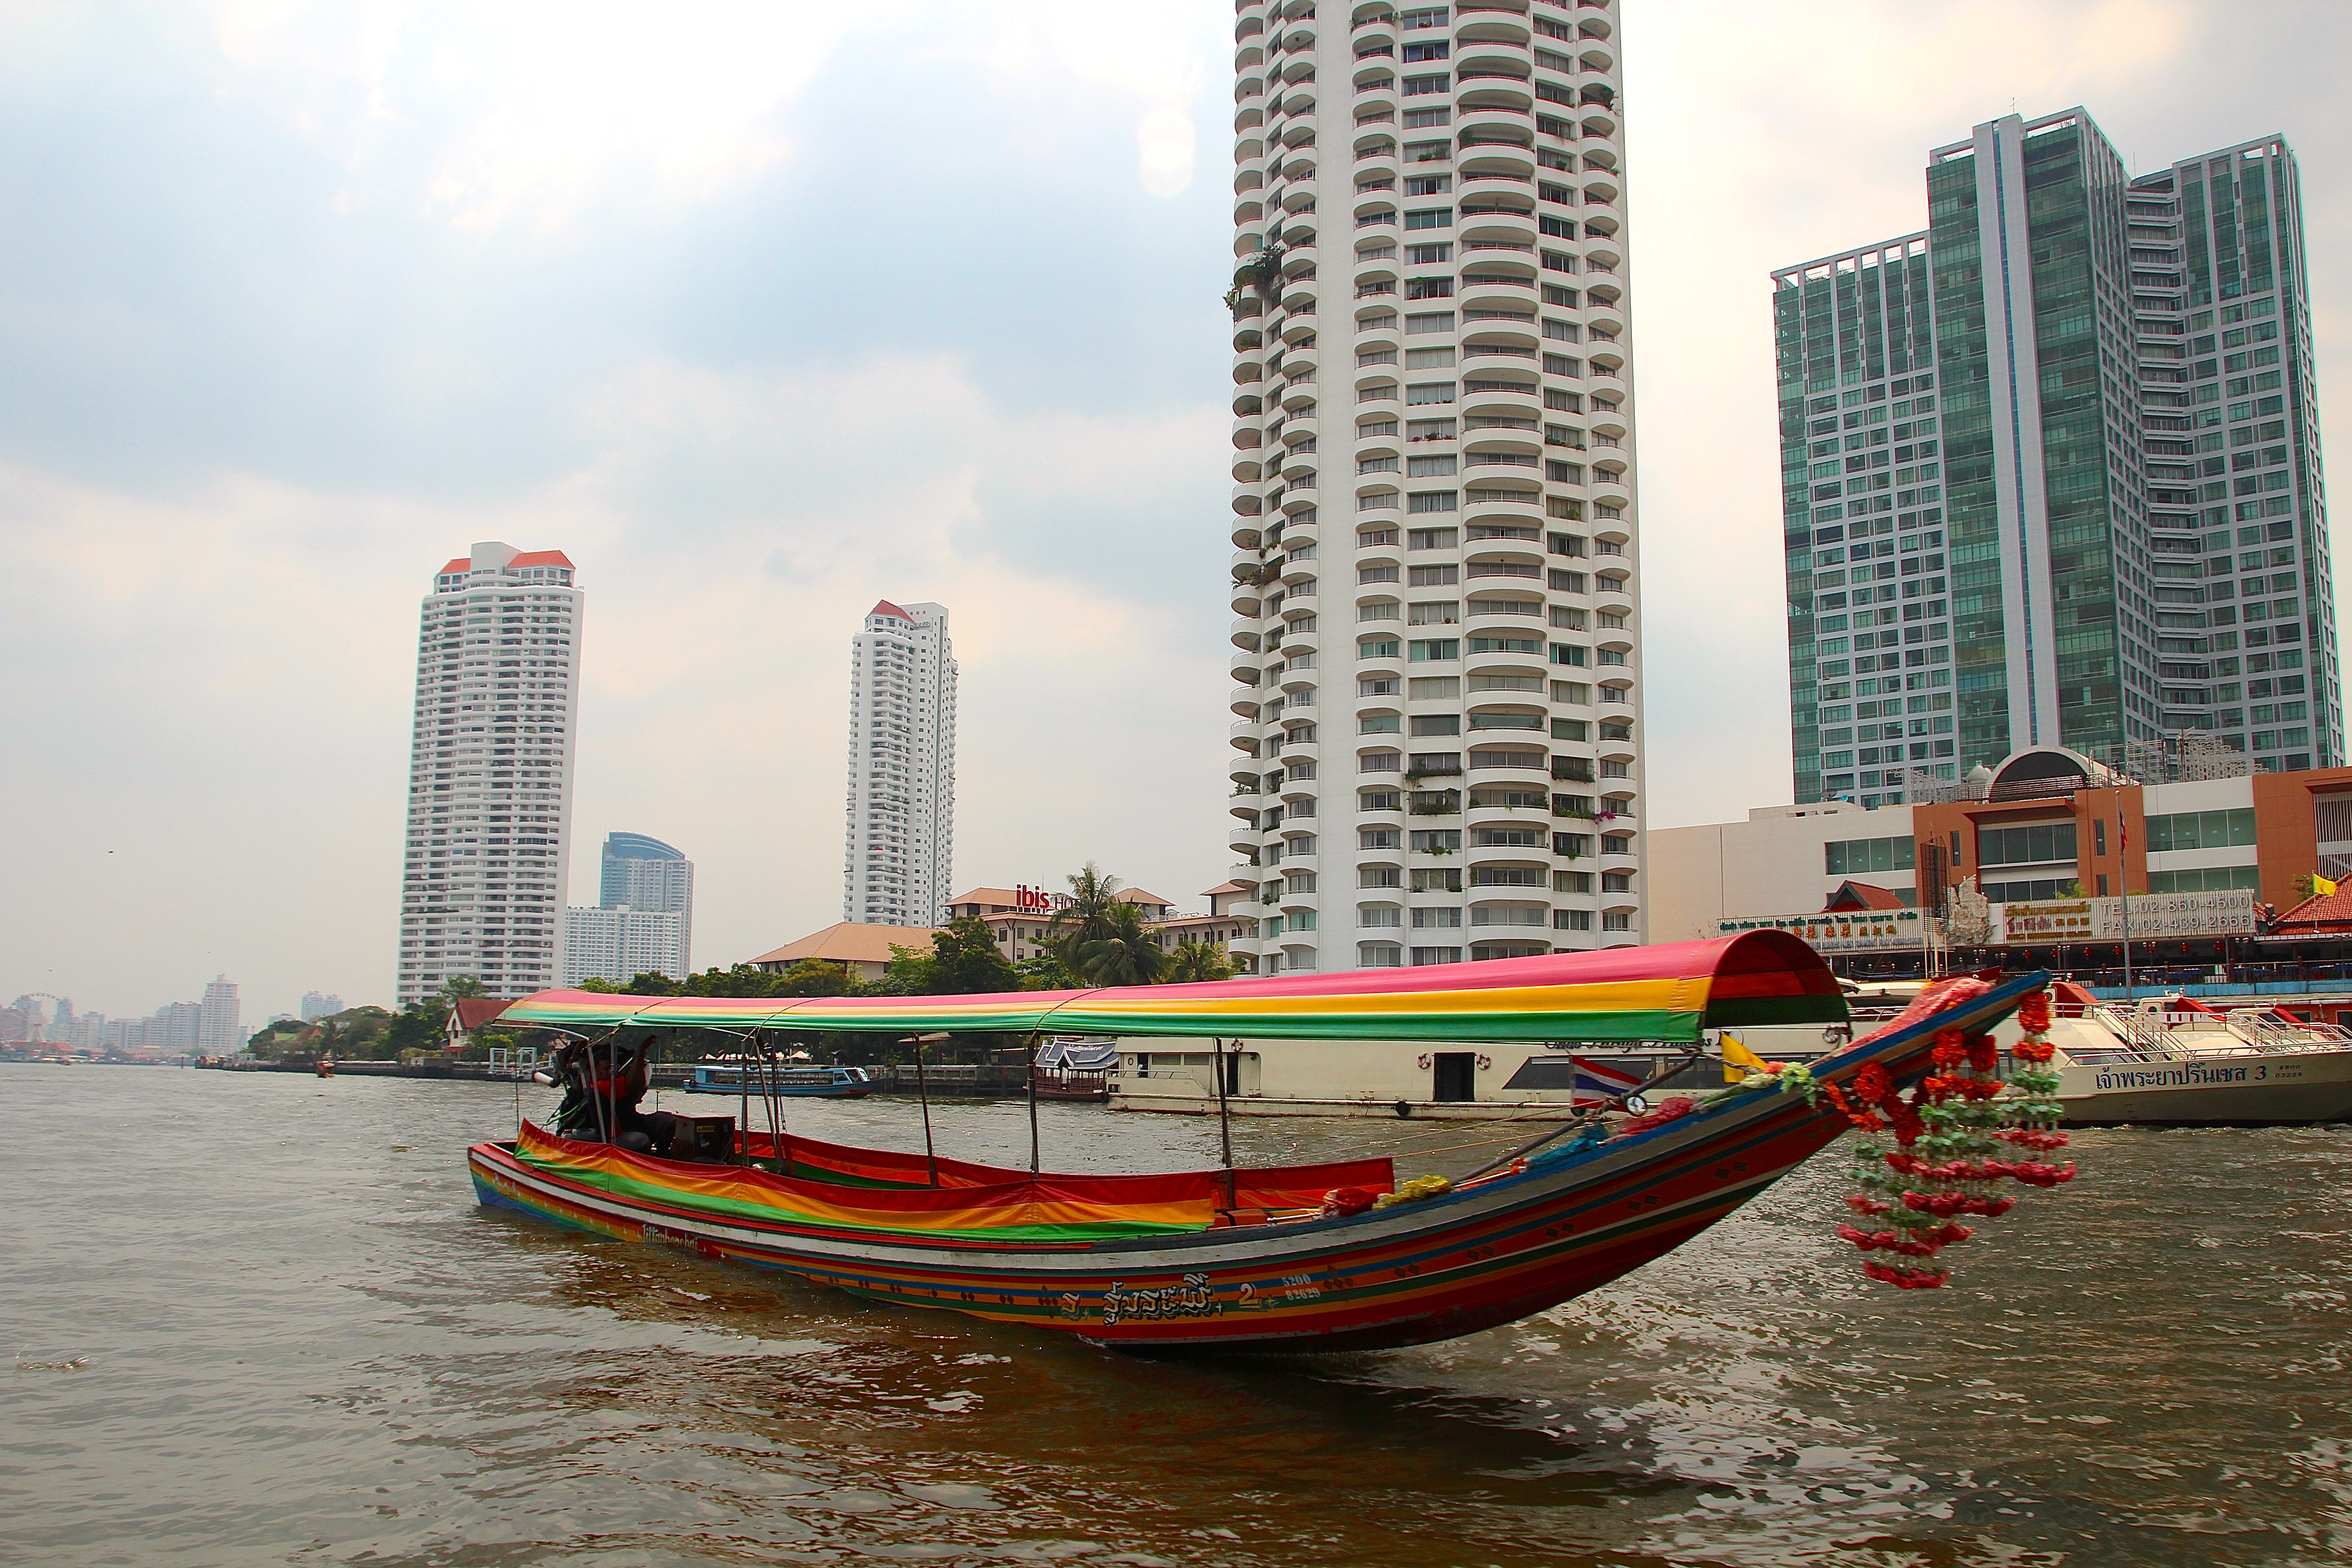 Бангкок чао прая. Чао Прайя Бангкок. Река Чао Прайя. Река Чаопрайя в Бангкоке. Бангкок река Чао Прайя местная лодка.